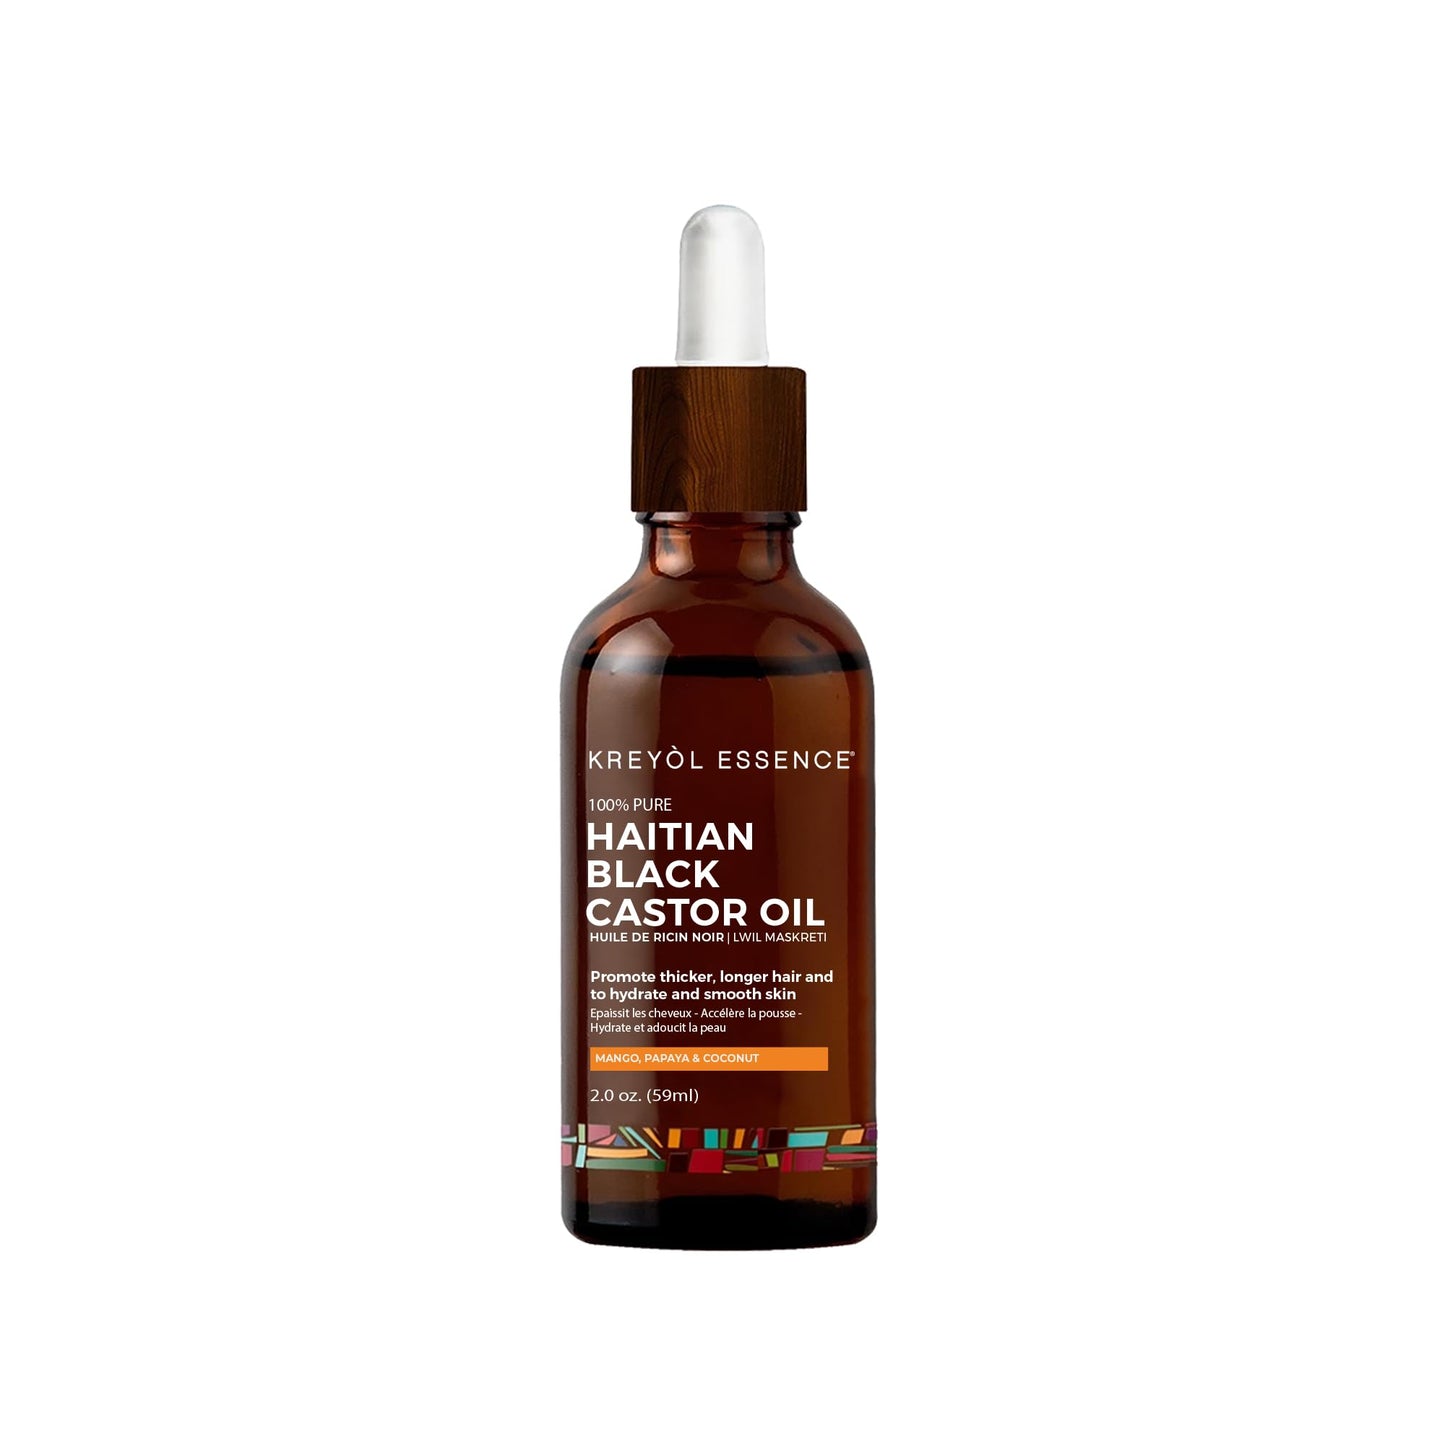 Kreyol Essence - 3.4 Oz Mango Papaya & Coconut Haitian Black Castor Oil - Omega Fatty Acids (3,6,9), Skin, Hair and Body, Hair Growth